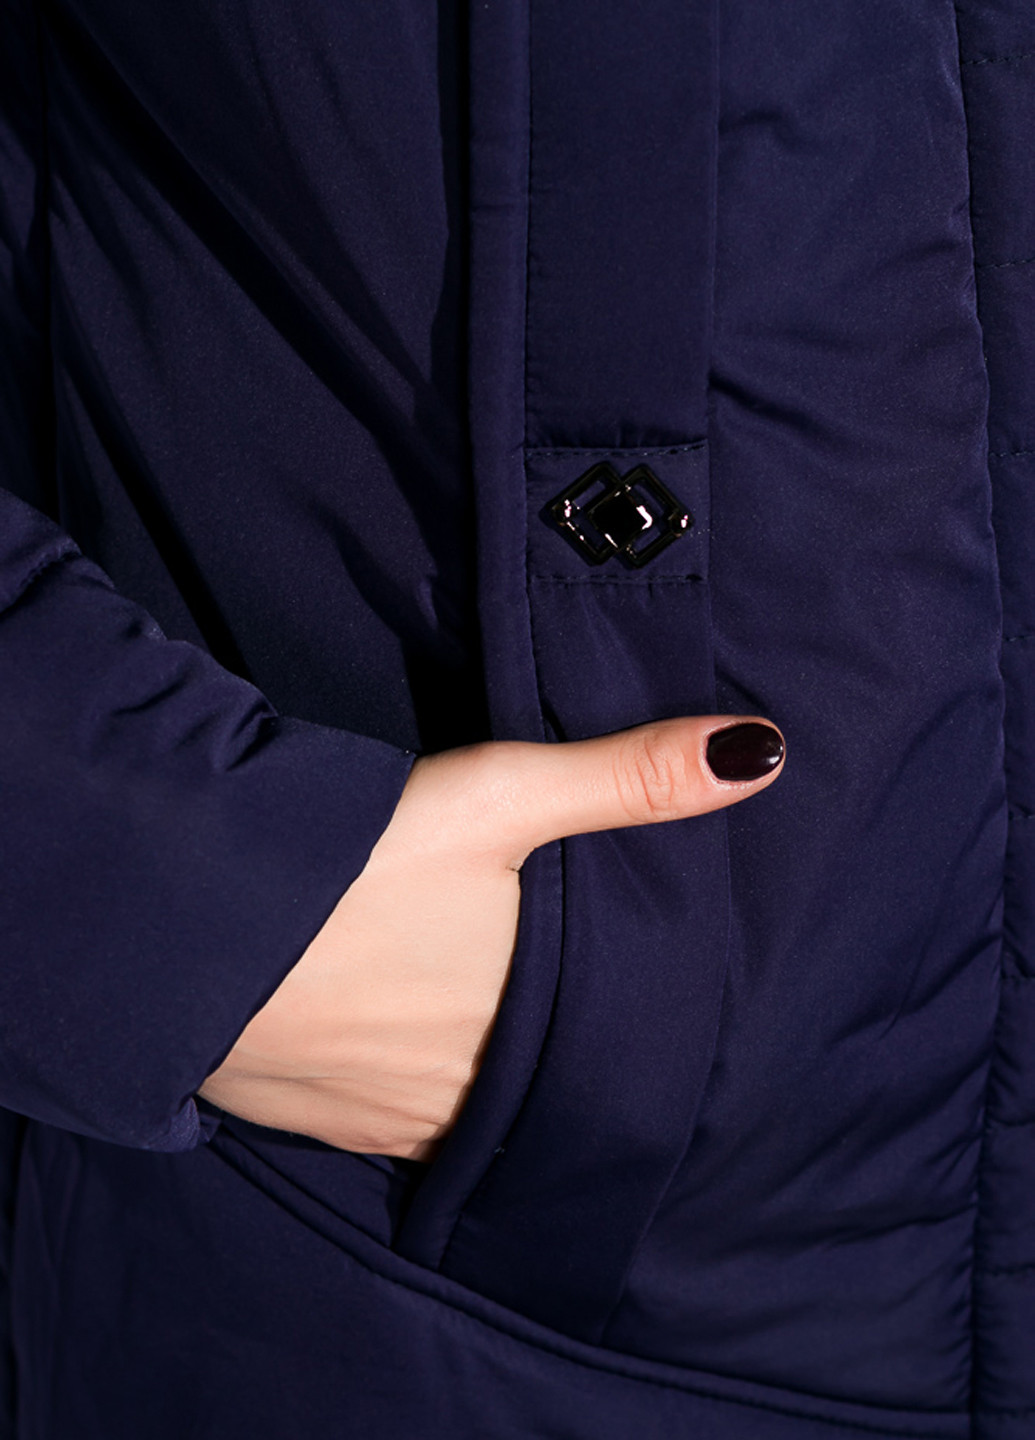 Темно-синя зимня куртка Time of Style